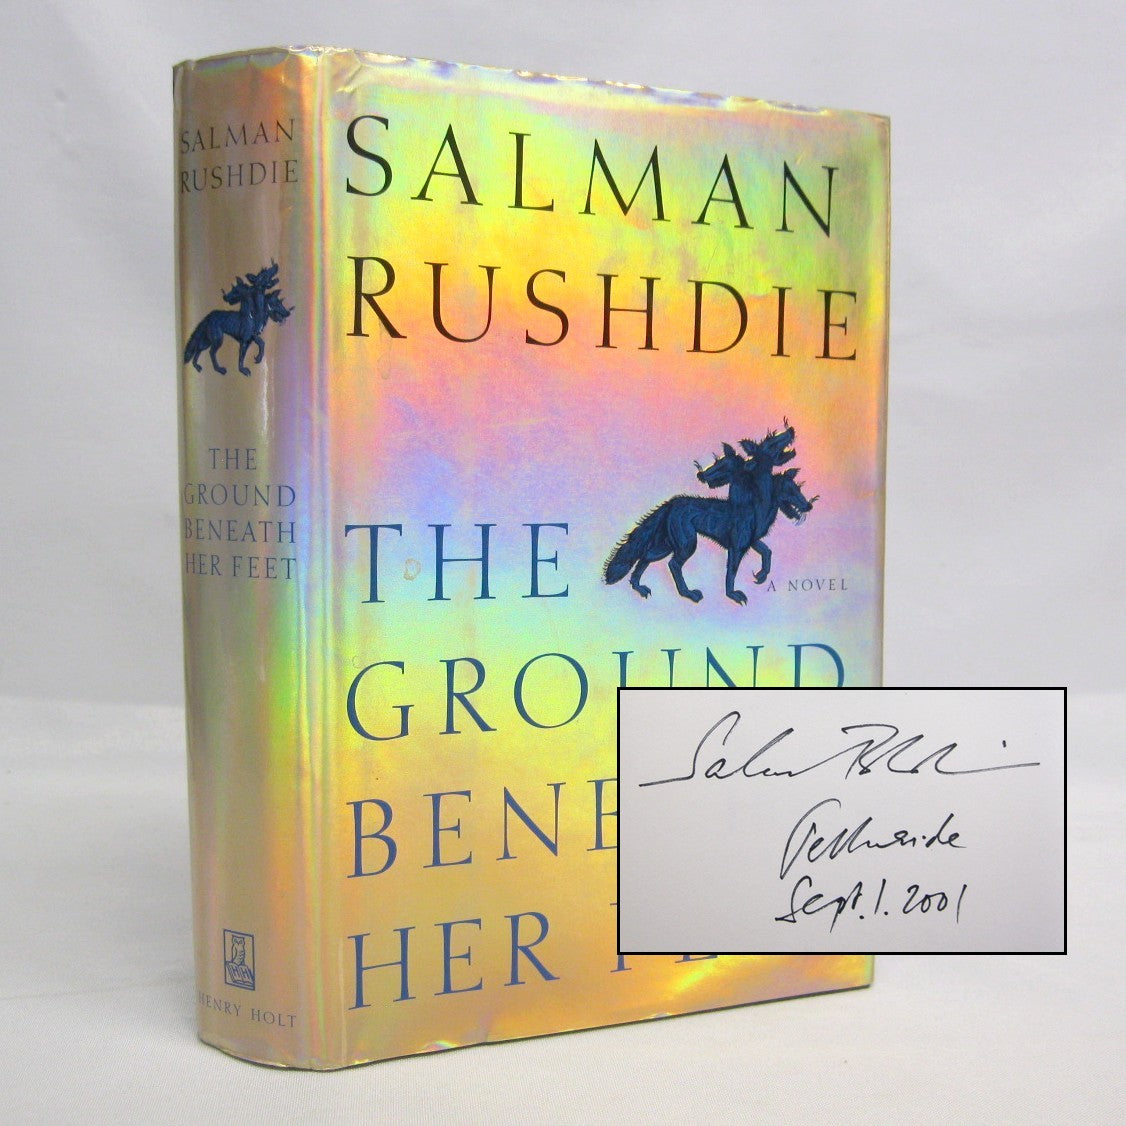 The Ground Beneath Her Feet by Salman Rushdie